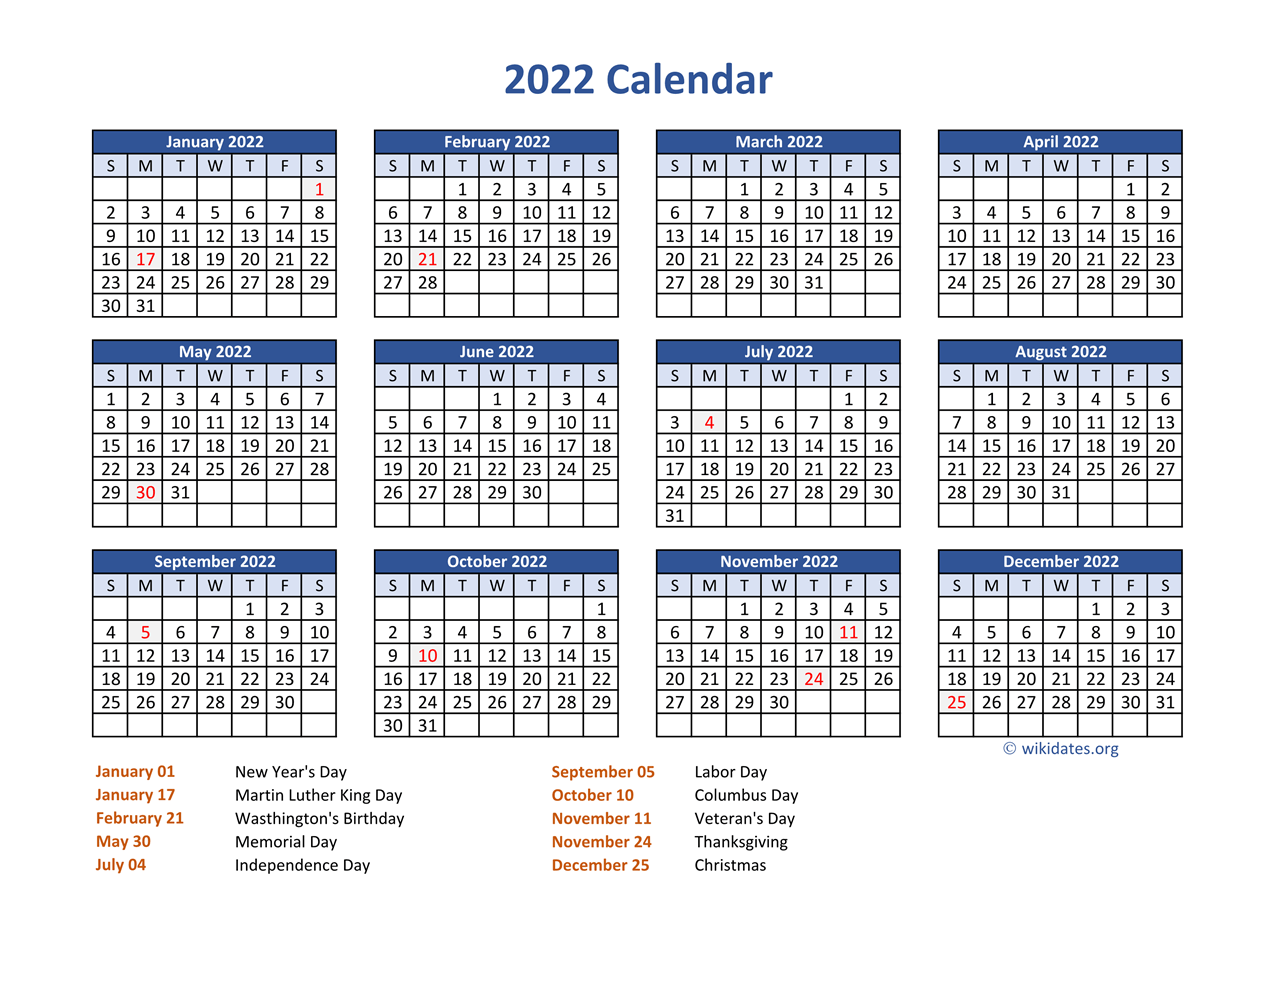 Pdf Calendar 2022 With Federal Holidays Wikidates Org